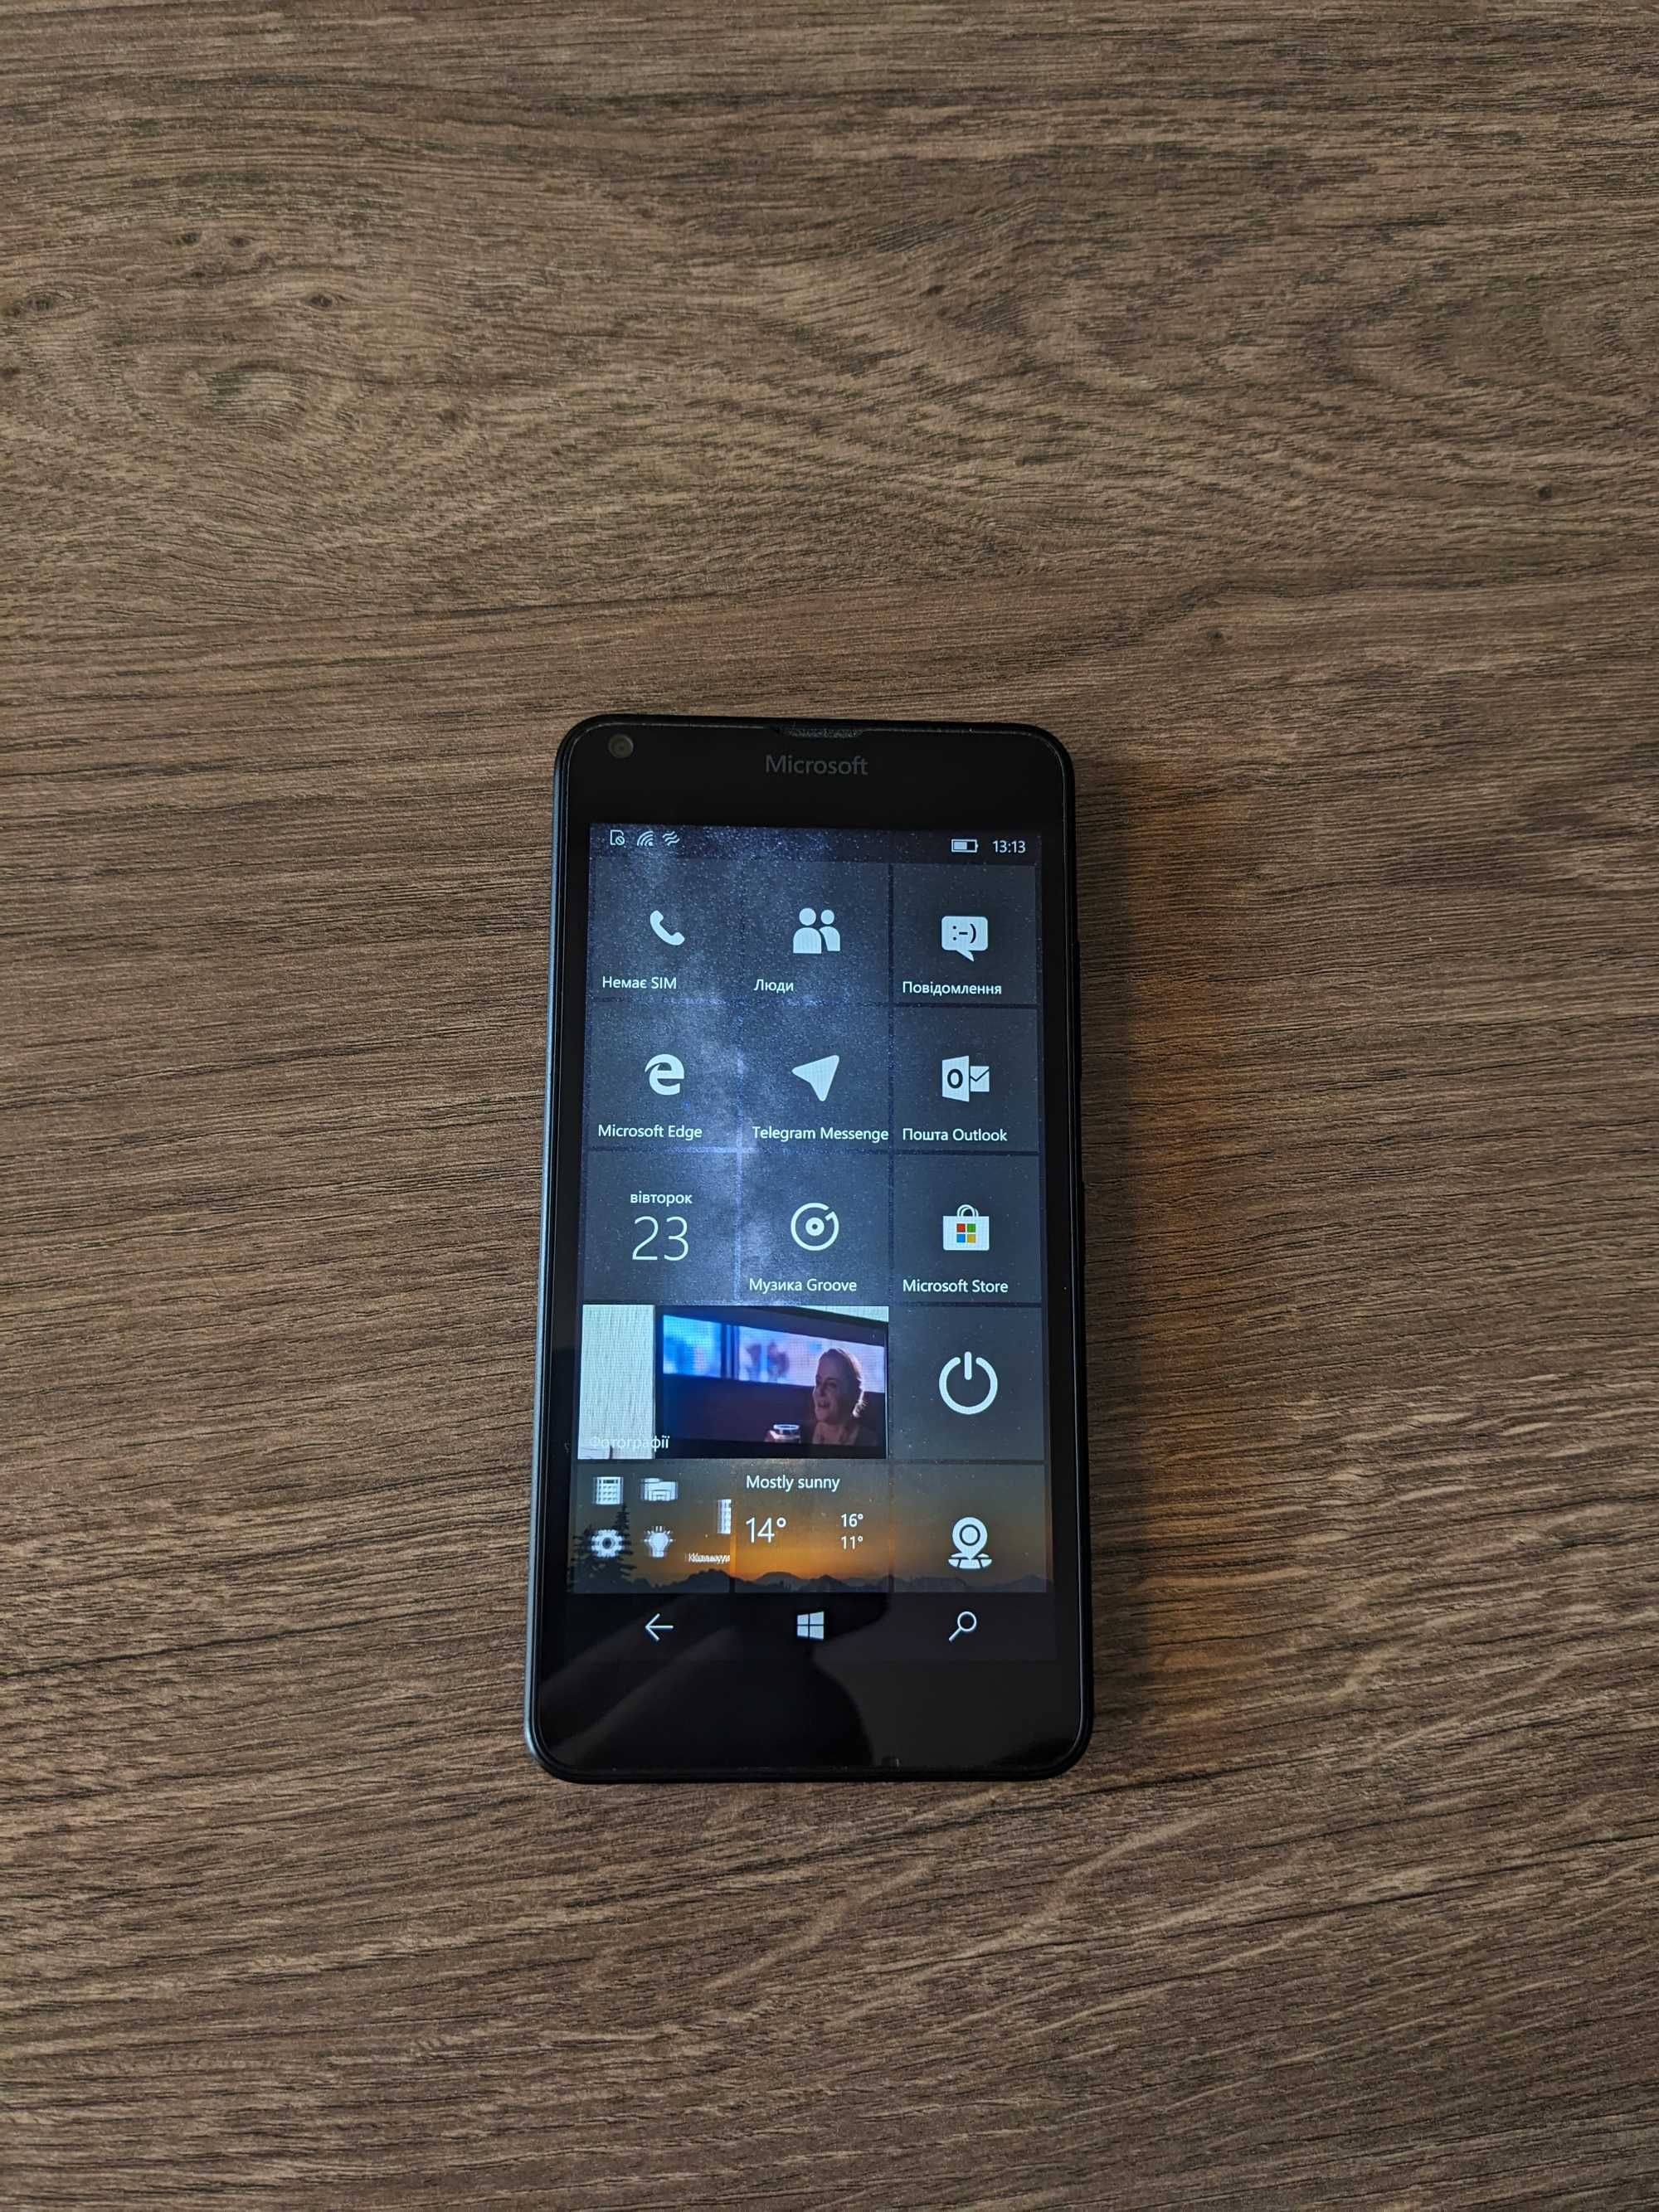 Microsoft lumia 640 lte (nokia) RM-1072 смартфон Windows 10, 4g модем